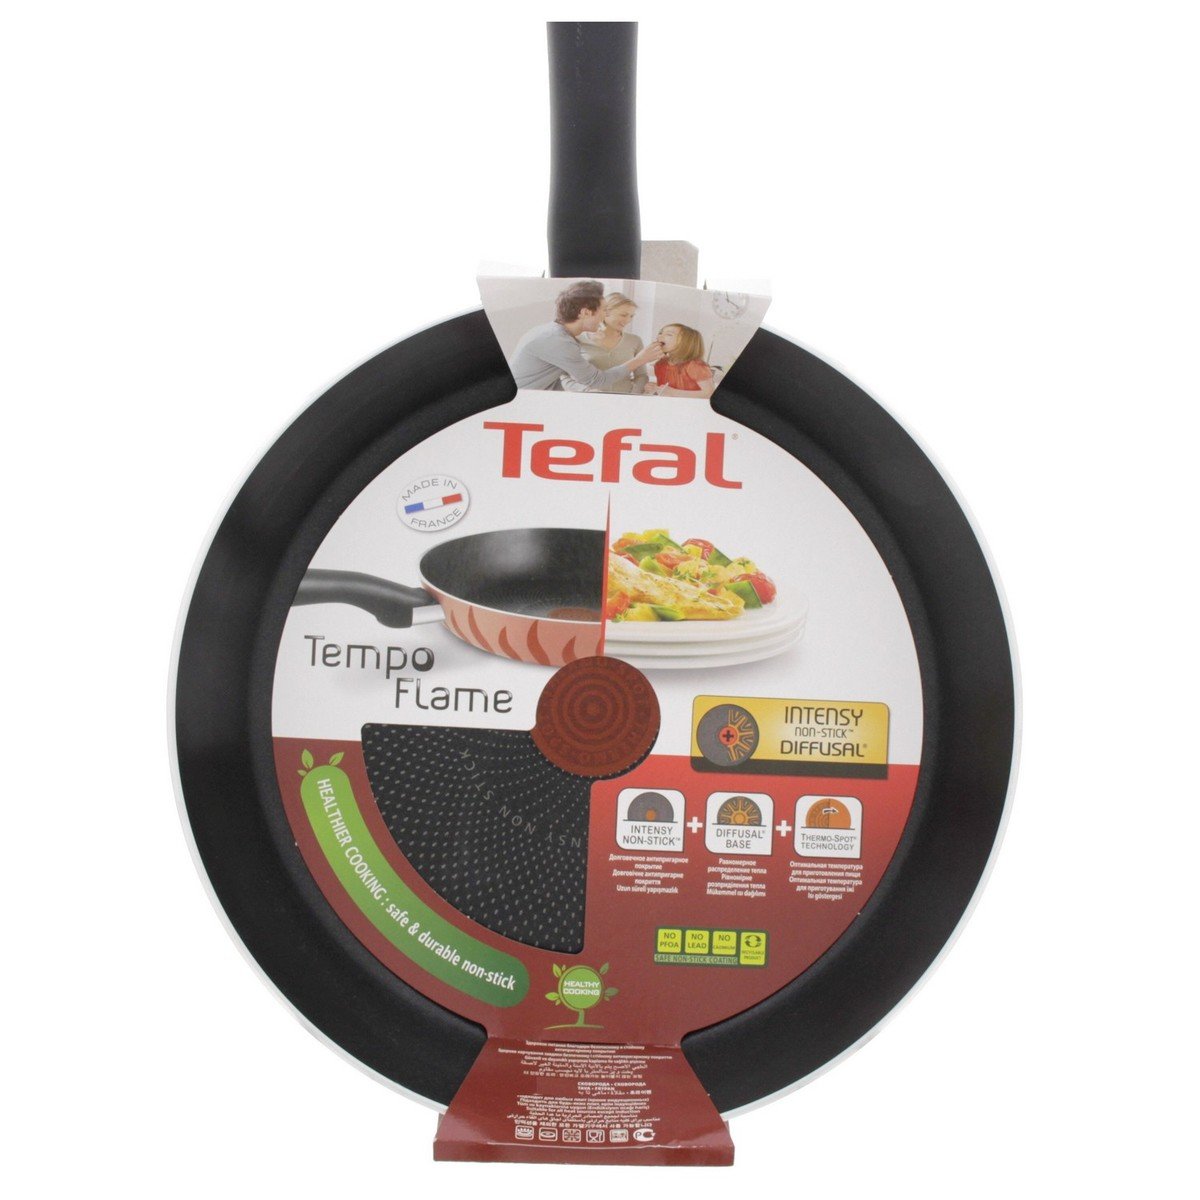 Tefal Tempo Flame Fry Pan, 20 cm, C0450262